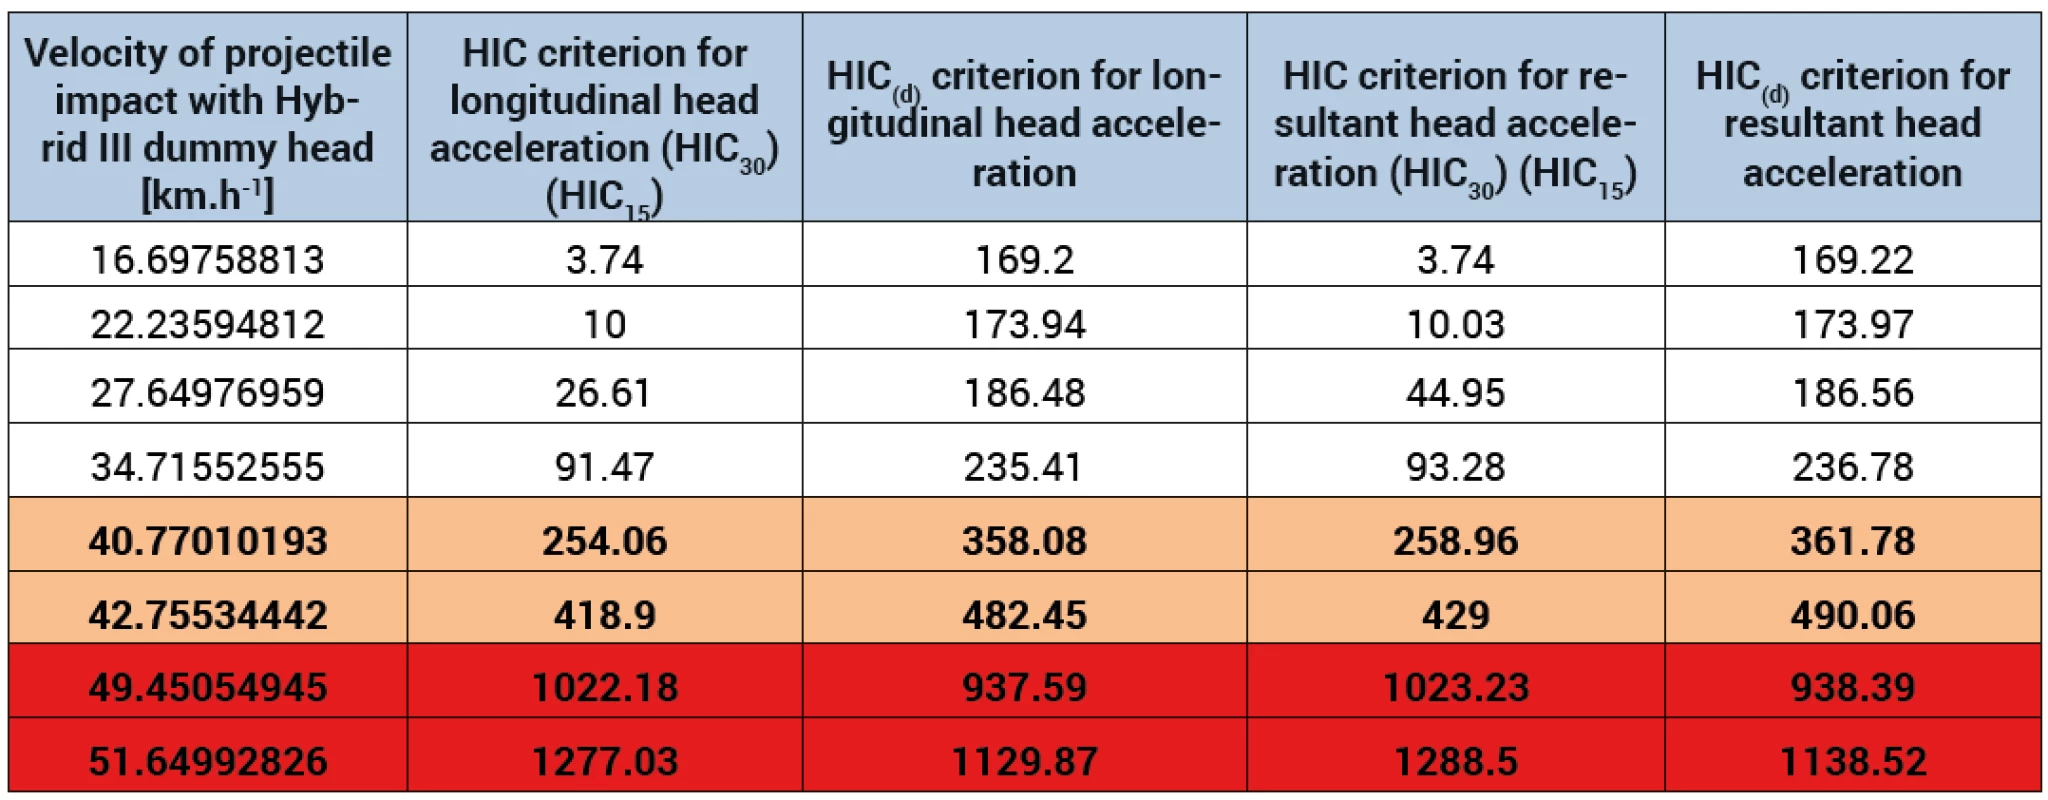 HIC criterion values for Hybrid III crash test dummy